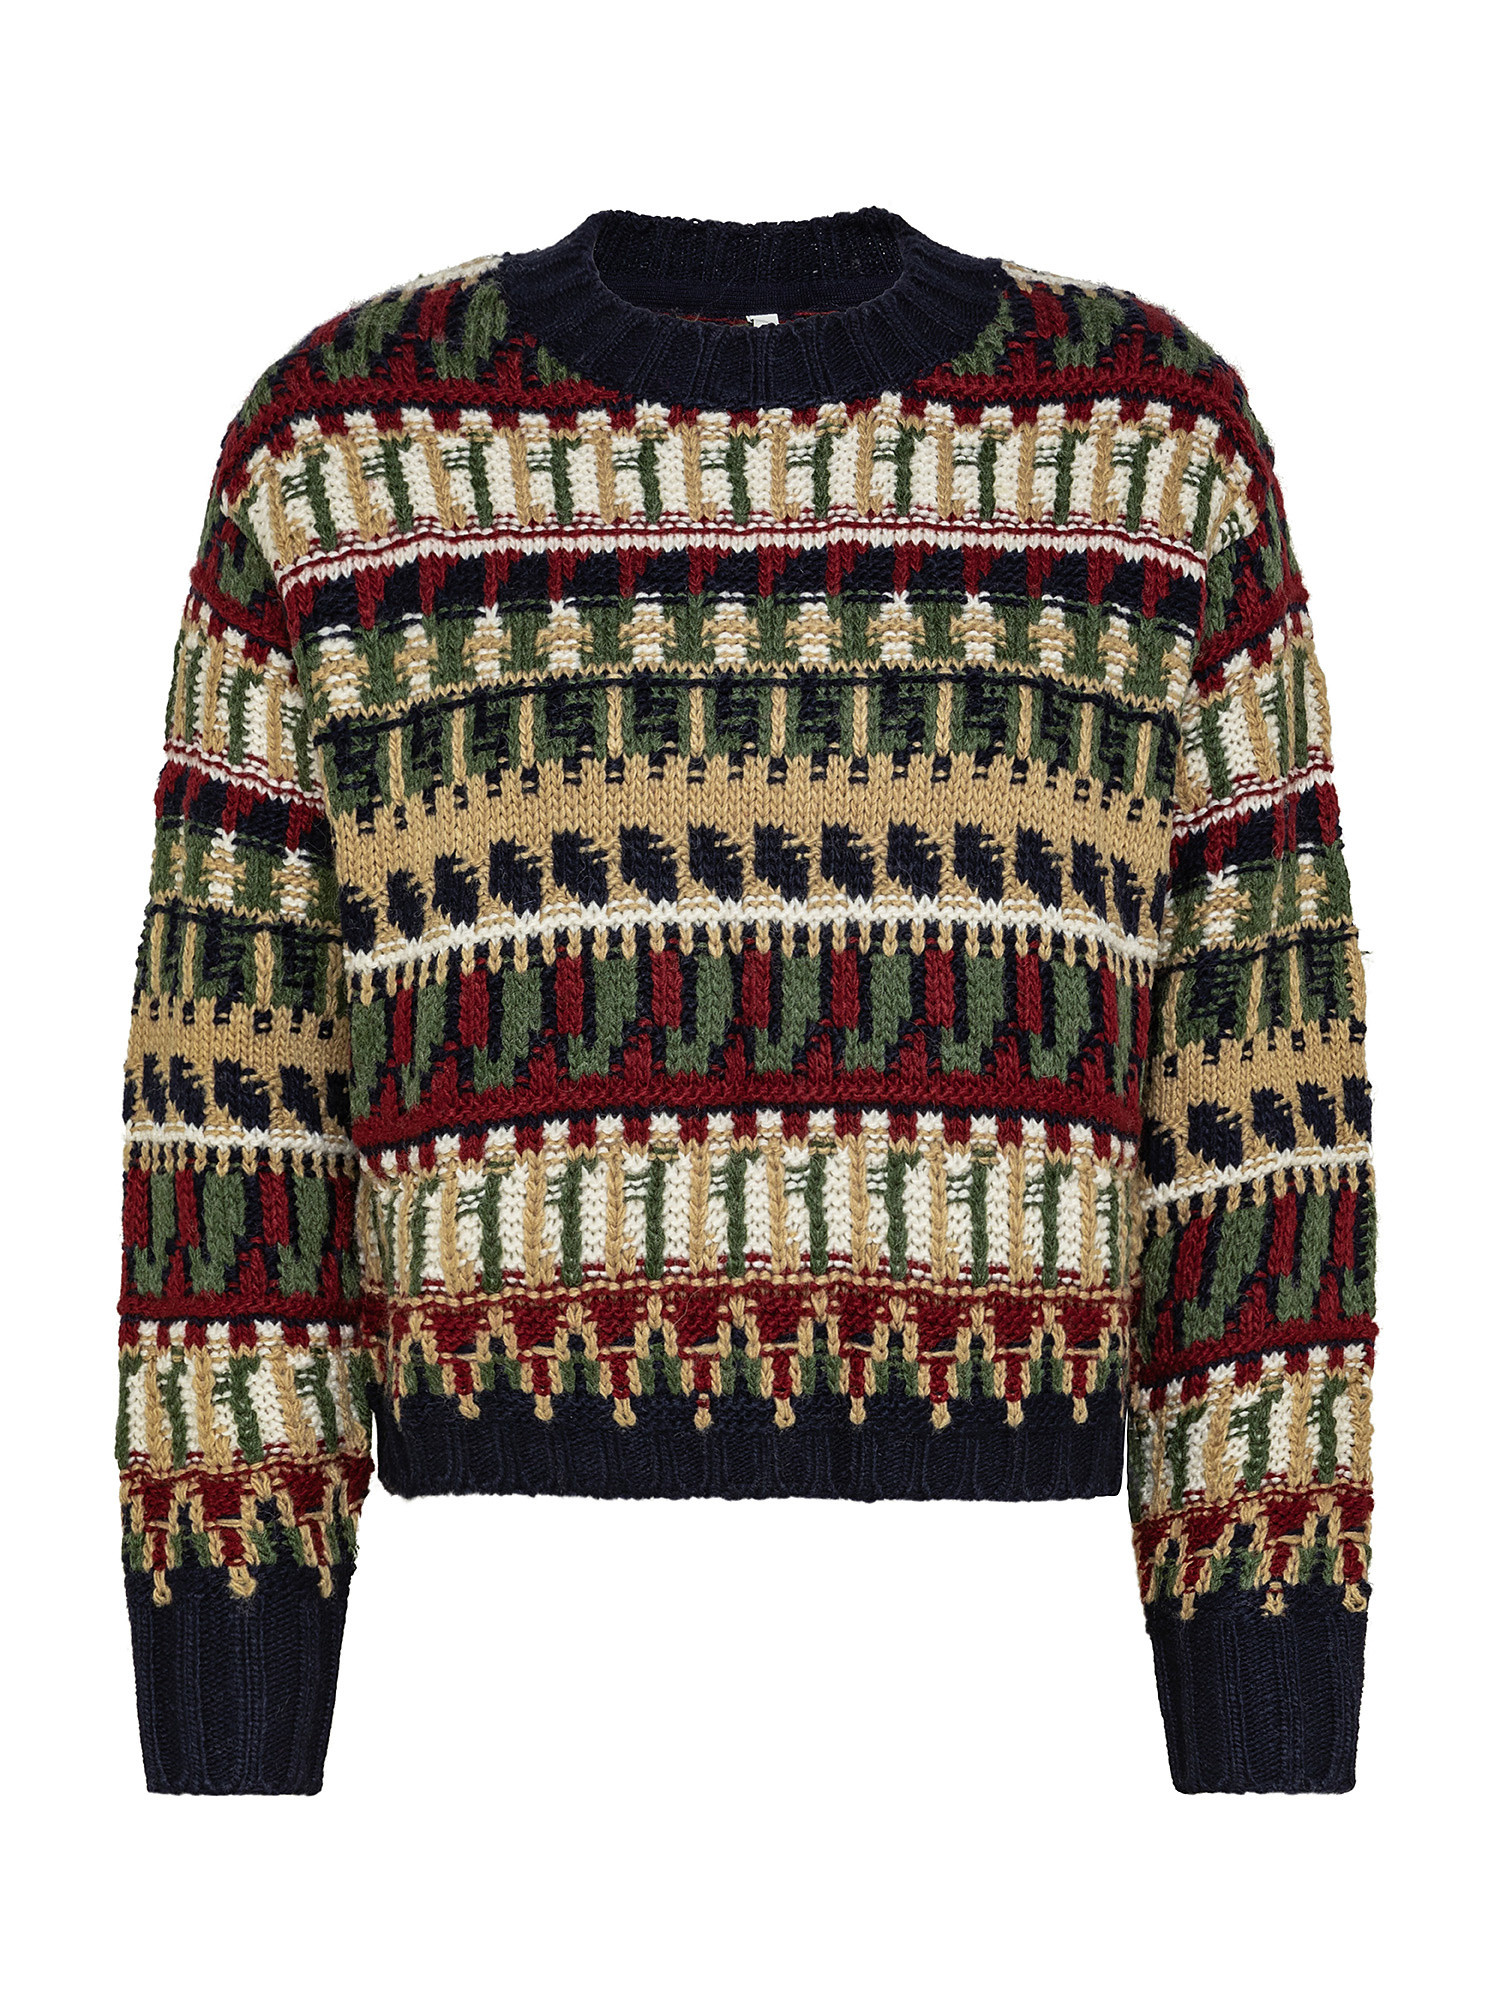 Barbara jacquard sweater, Multicolor, large image number 0